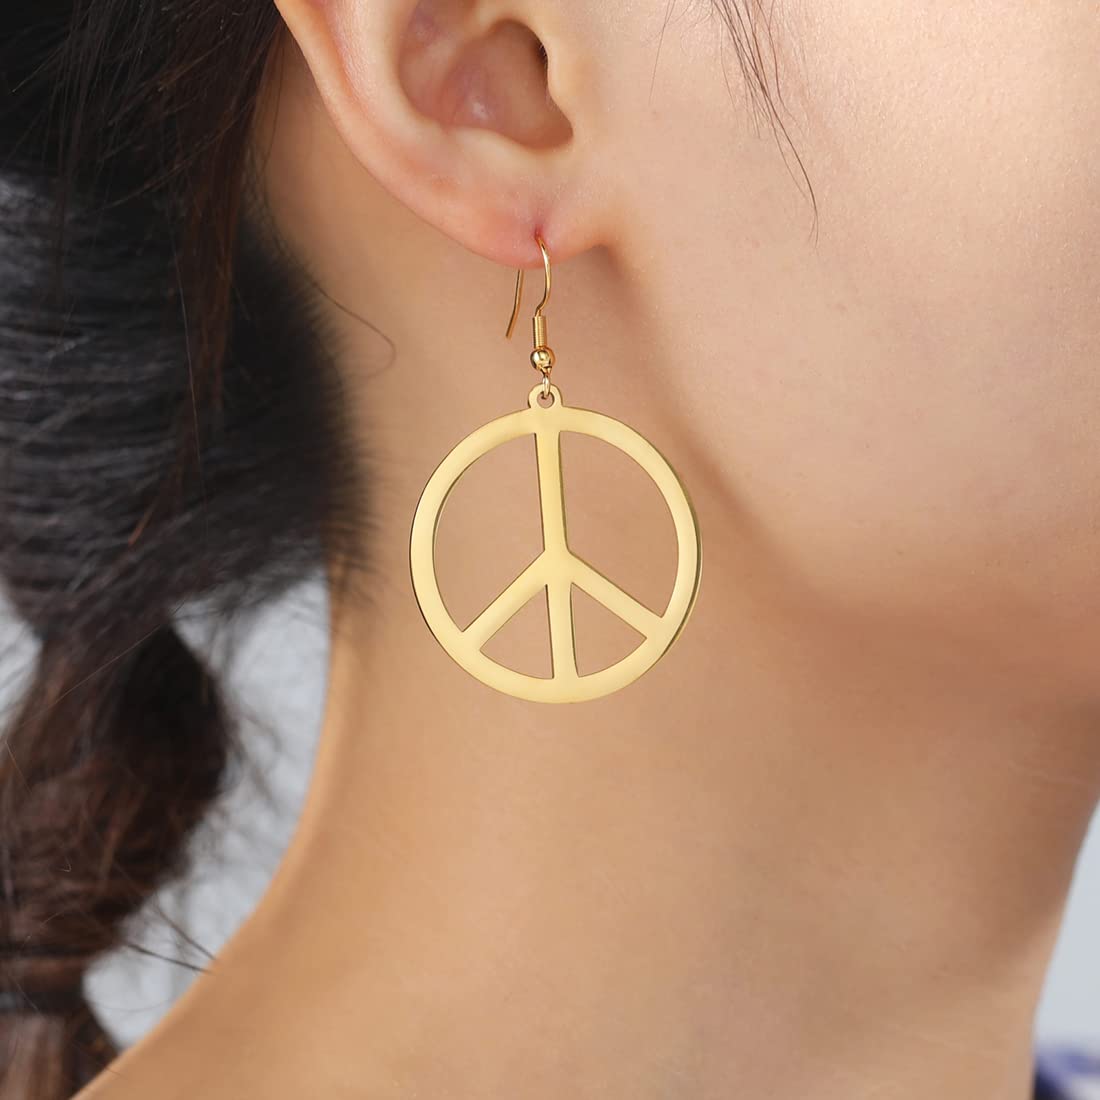 Peace Sign Symbol Earrings Geometric Large Round Statement Earrings Hippie Studs Jewelry Accessories Girls Women